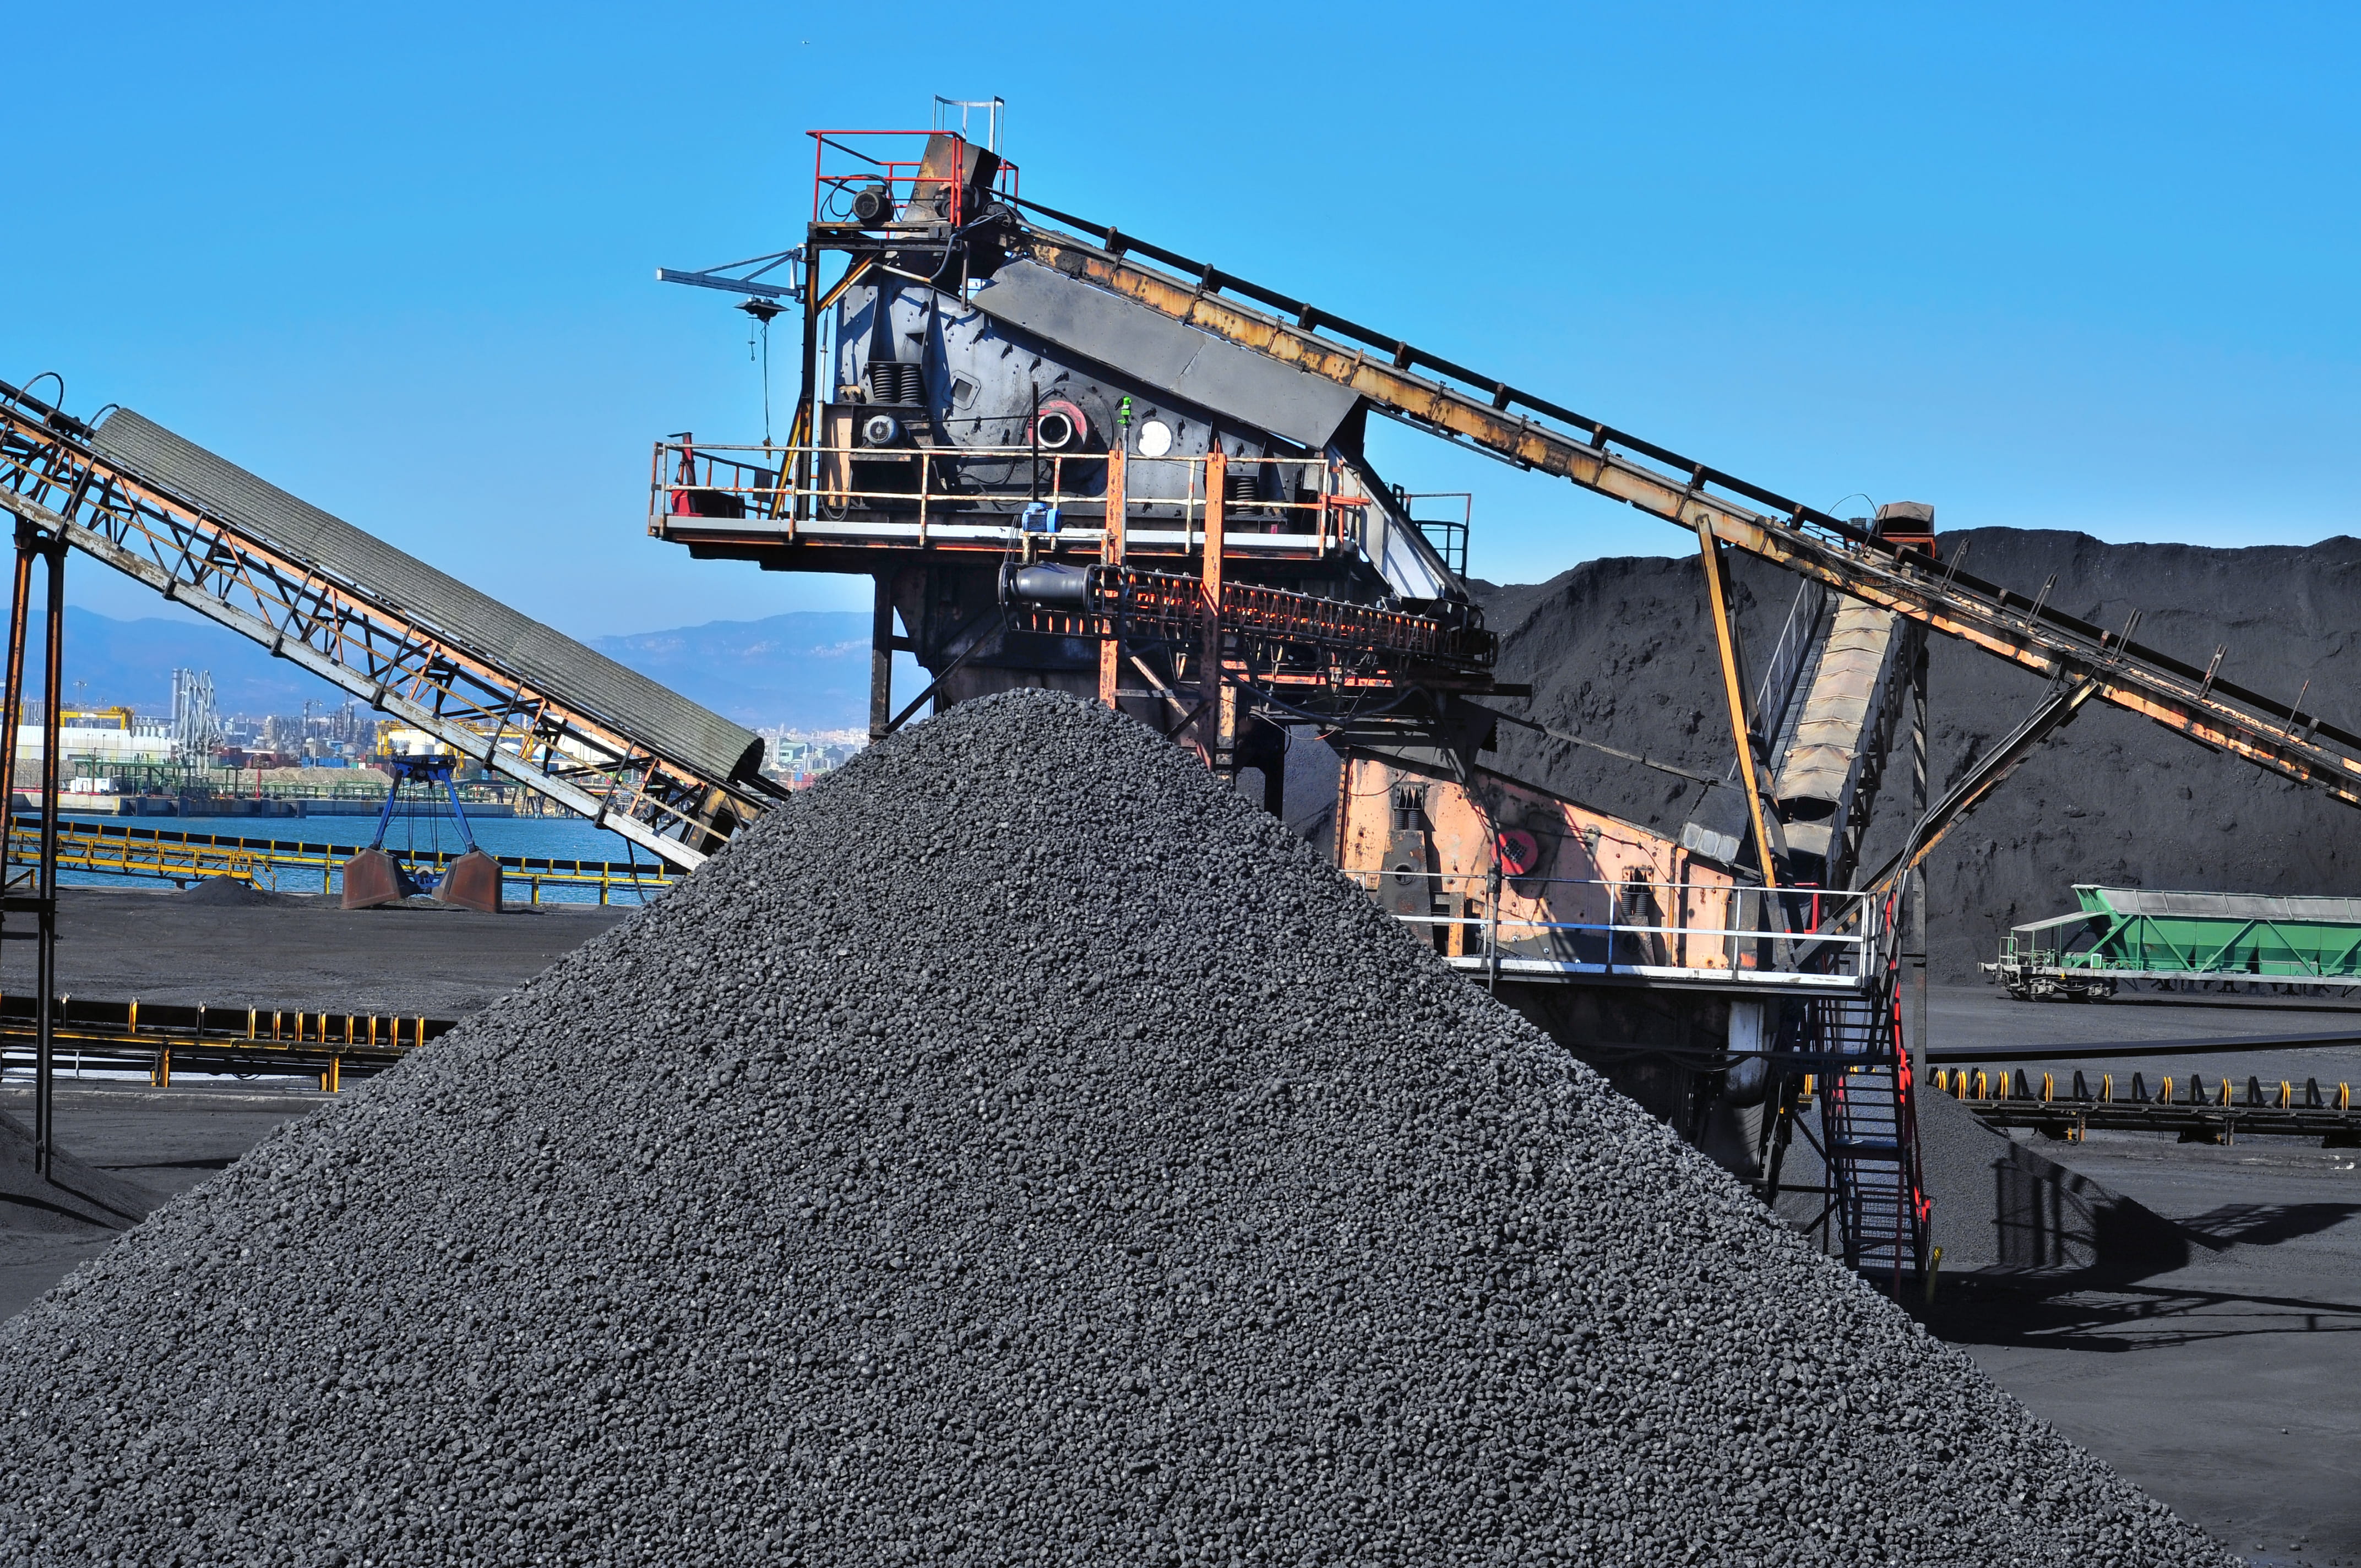 Machinery and coal pile